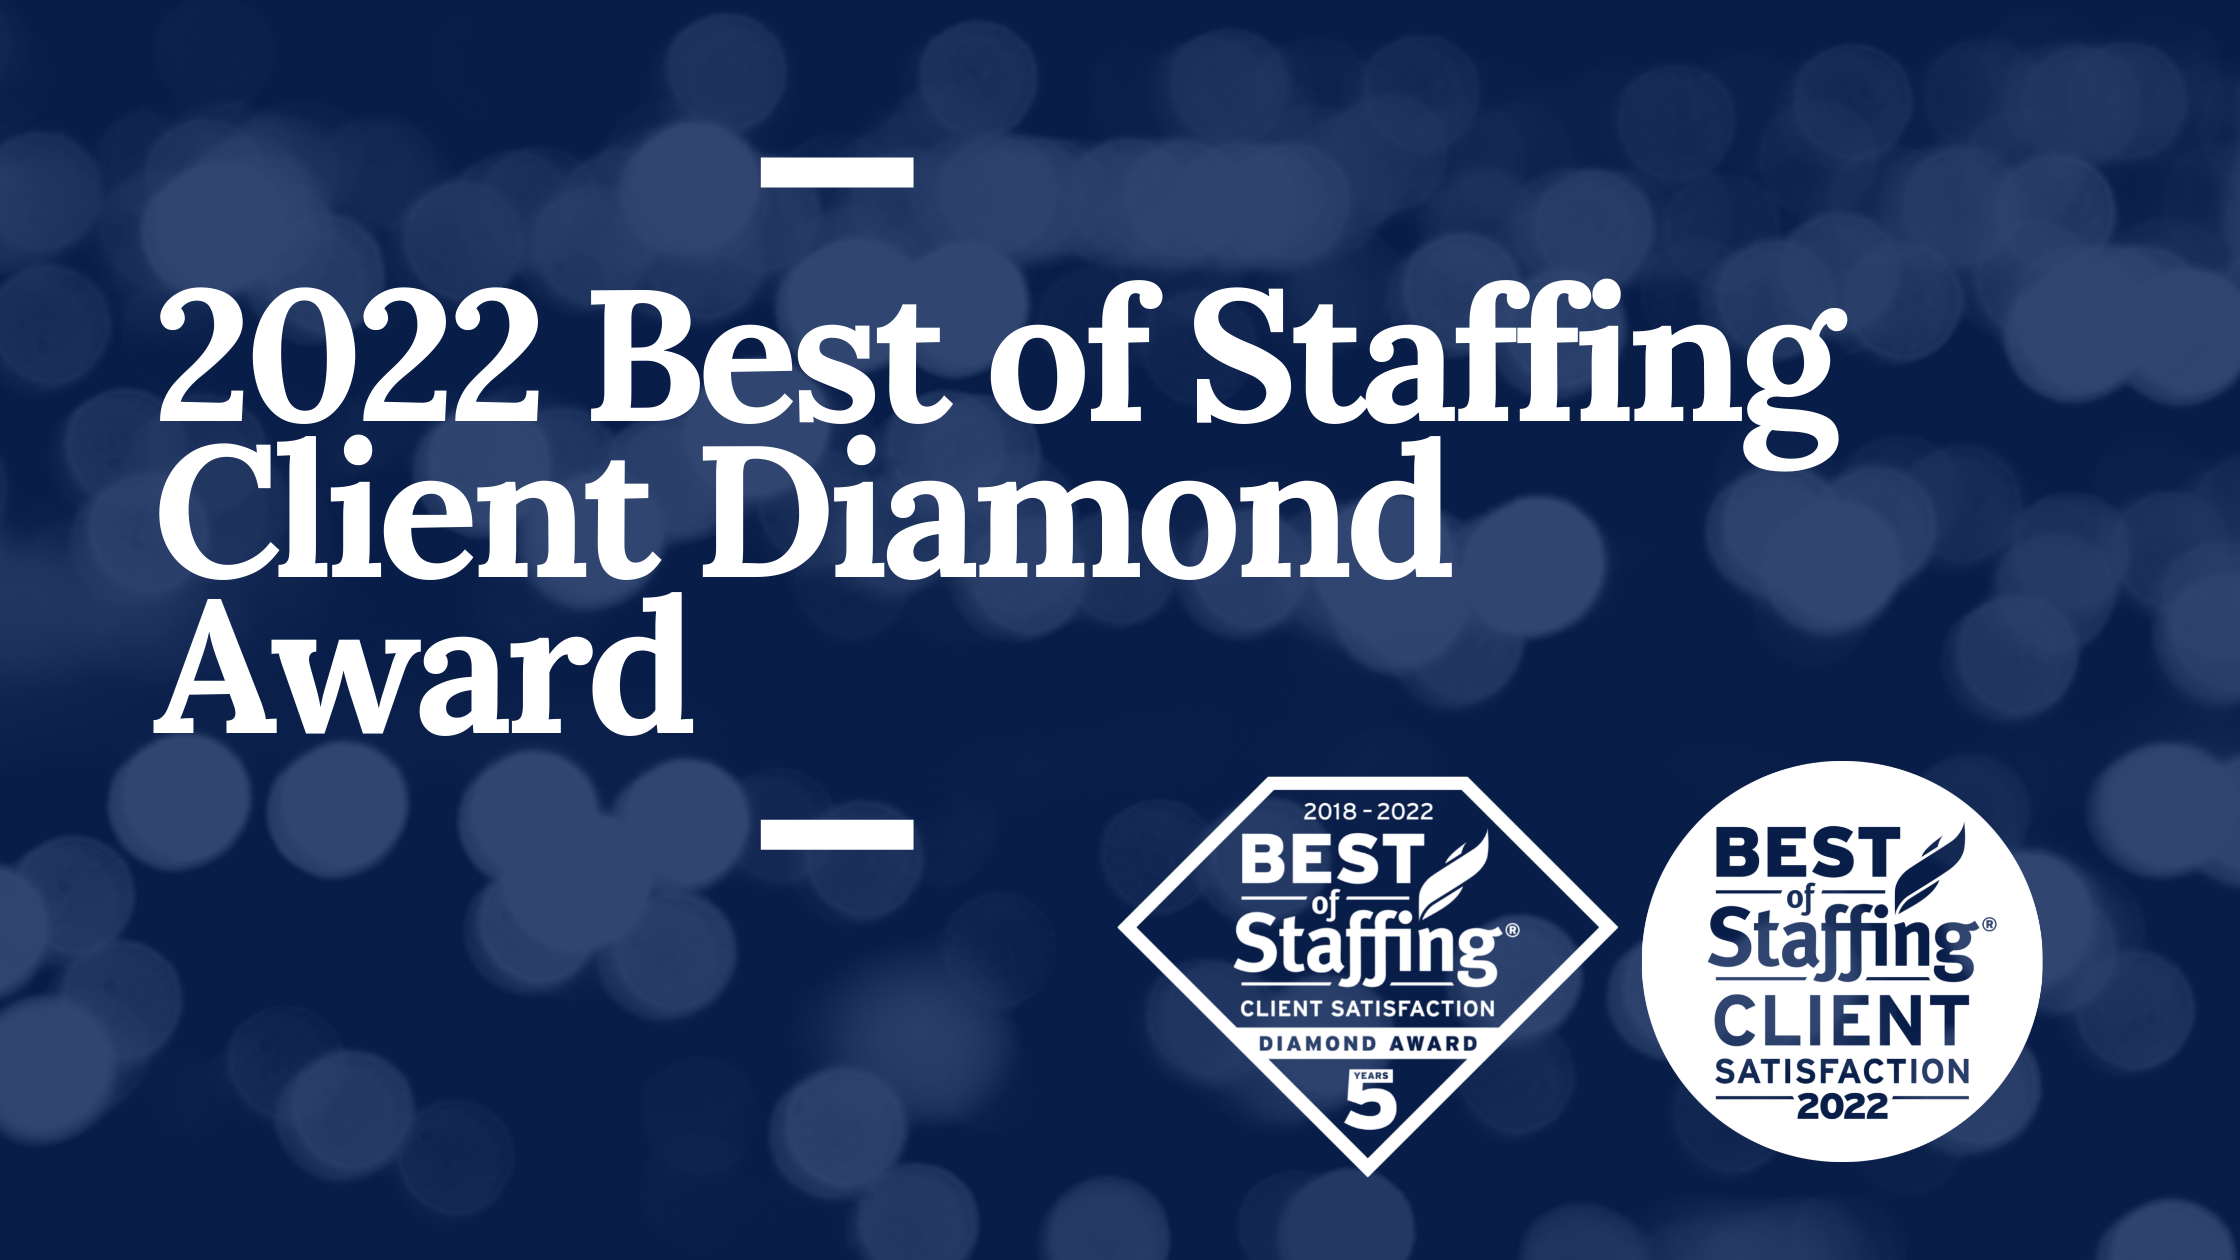 2022 Best of Staffing Client Diamond Award